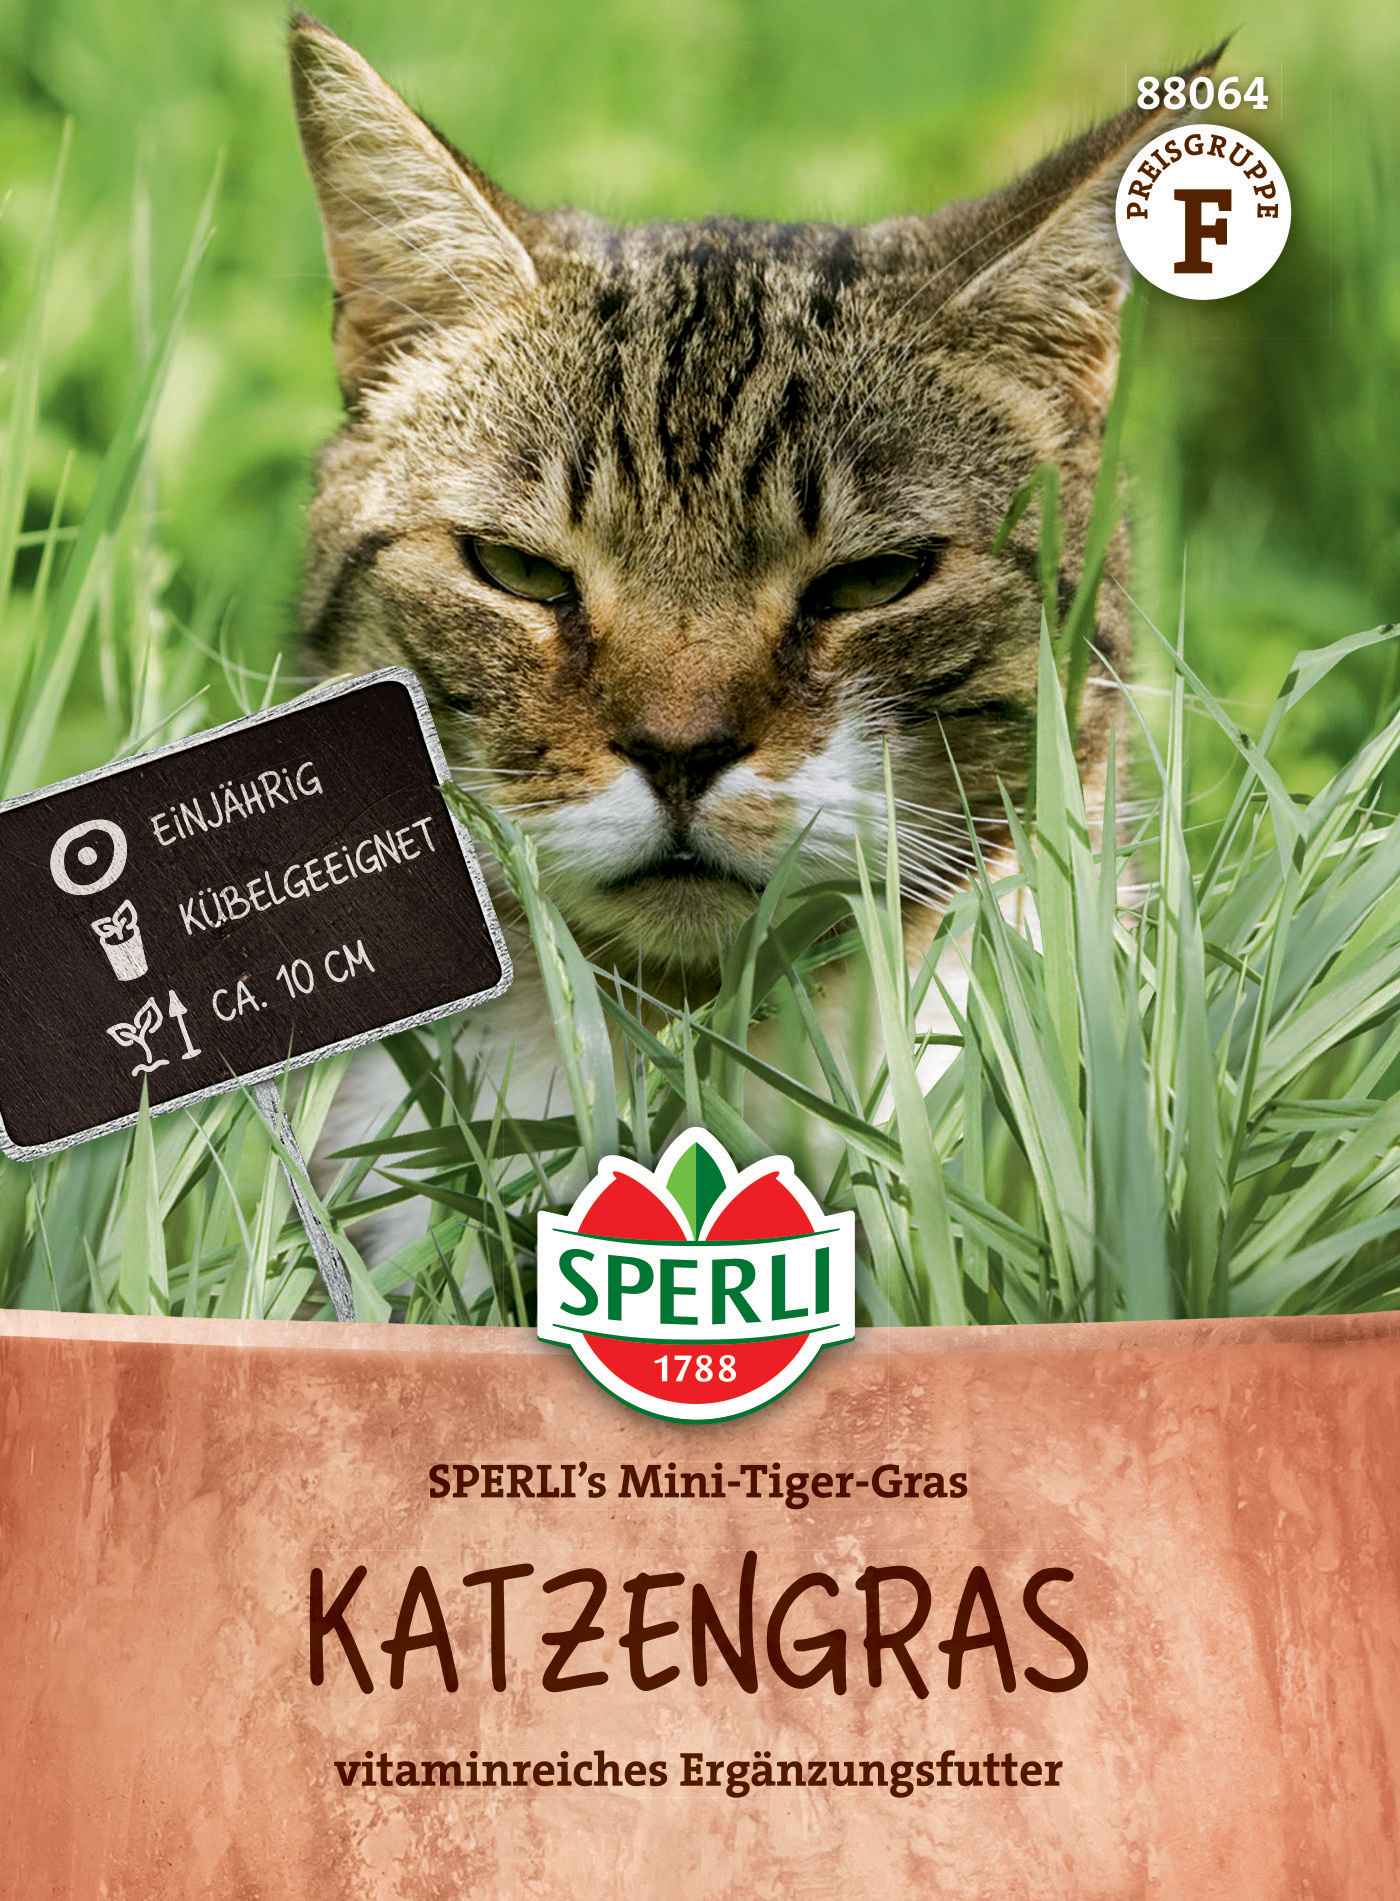 Katzengras SPERLI's Mini-Tiger-Gras